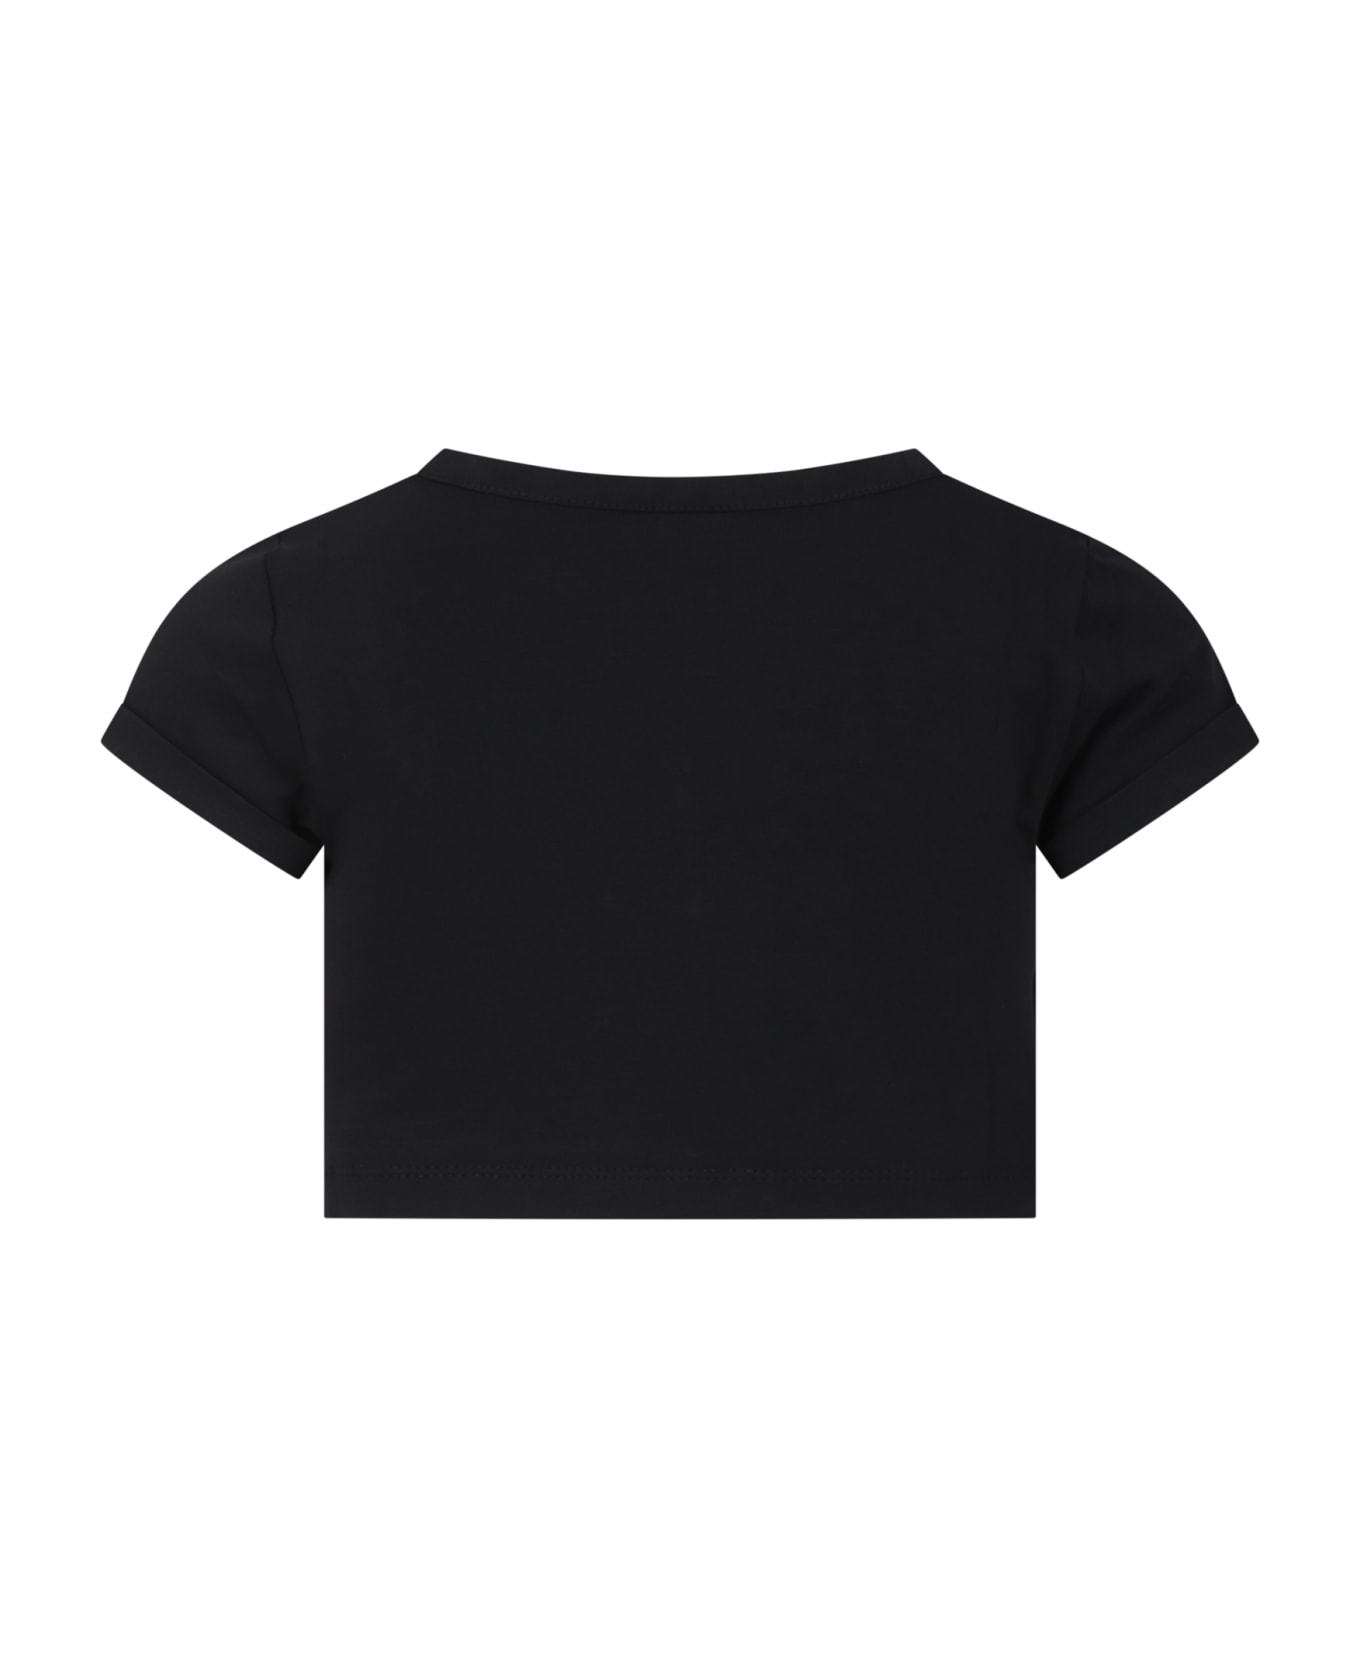 GCDS Mini Black T-shirt For Girl With Patterned Logo - Black